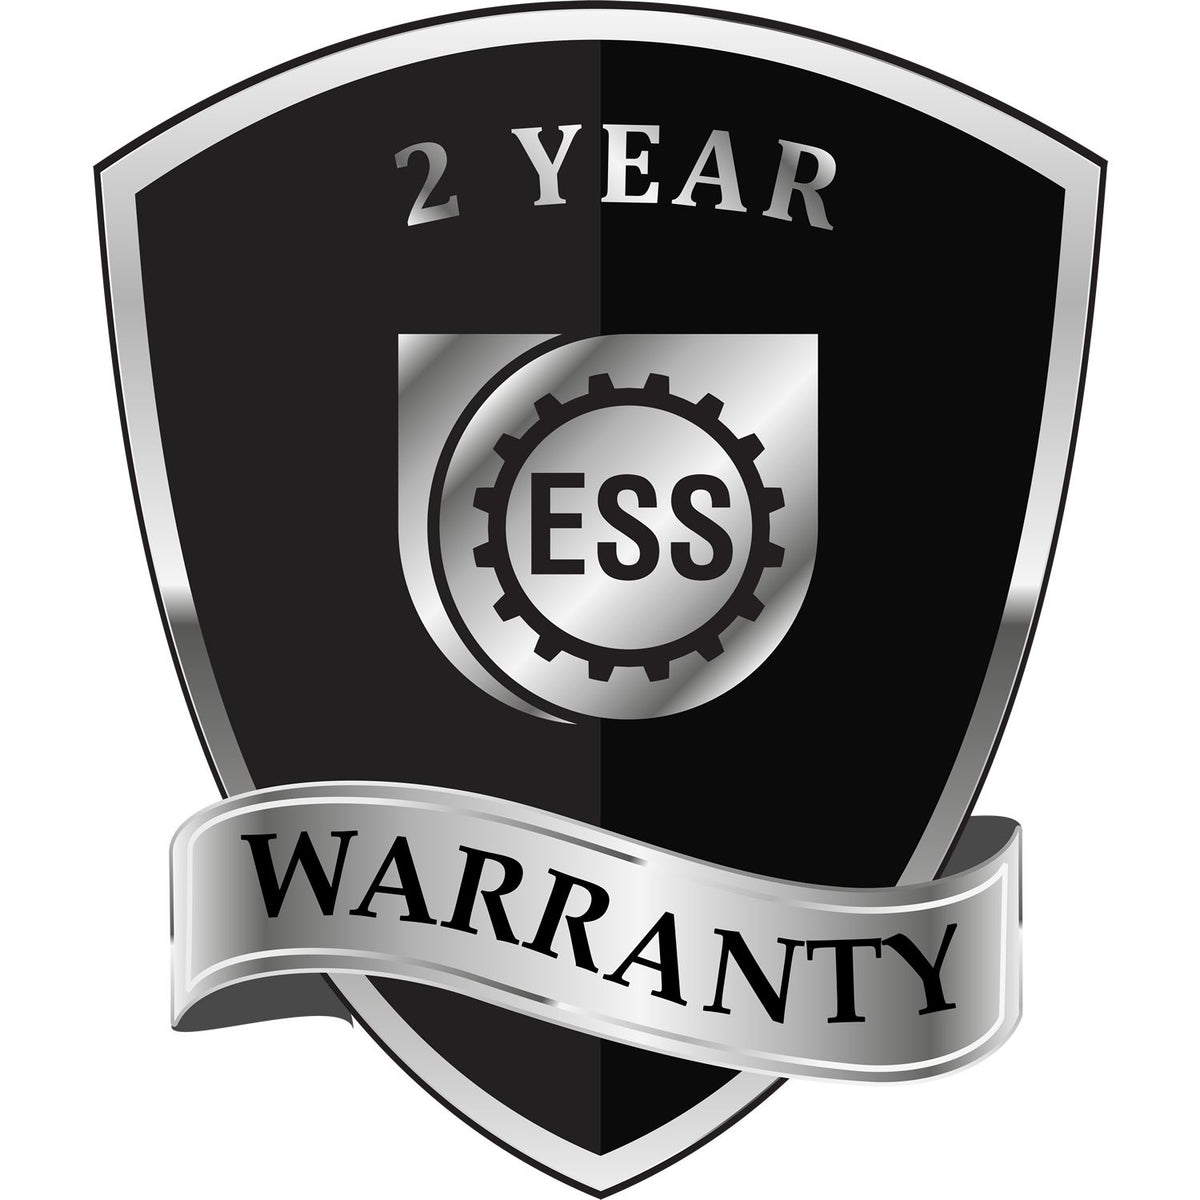 A black and silver badge or emblem showing warranty information for the Gift North Carolina Landscape Architect Seal